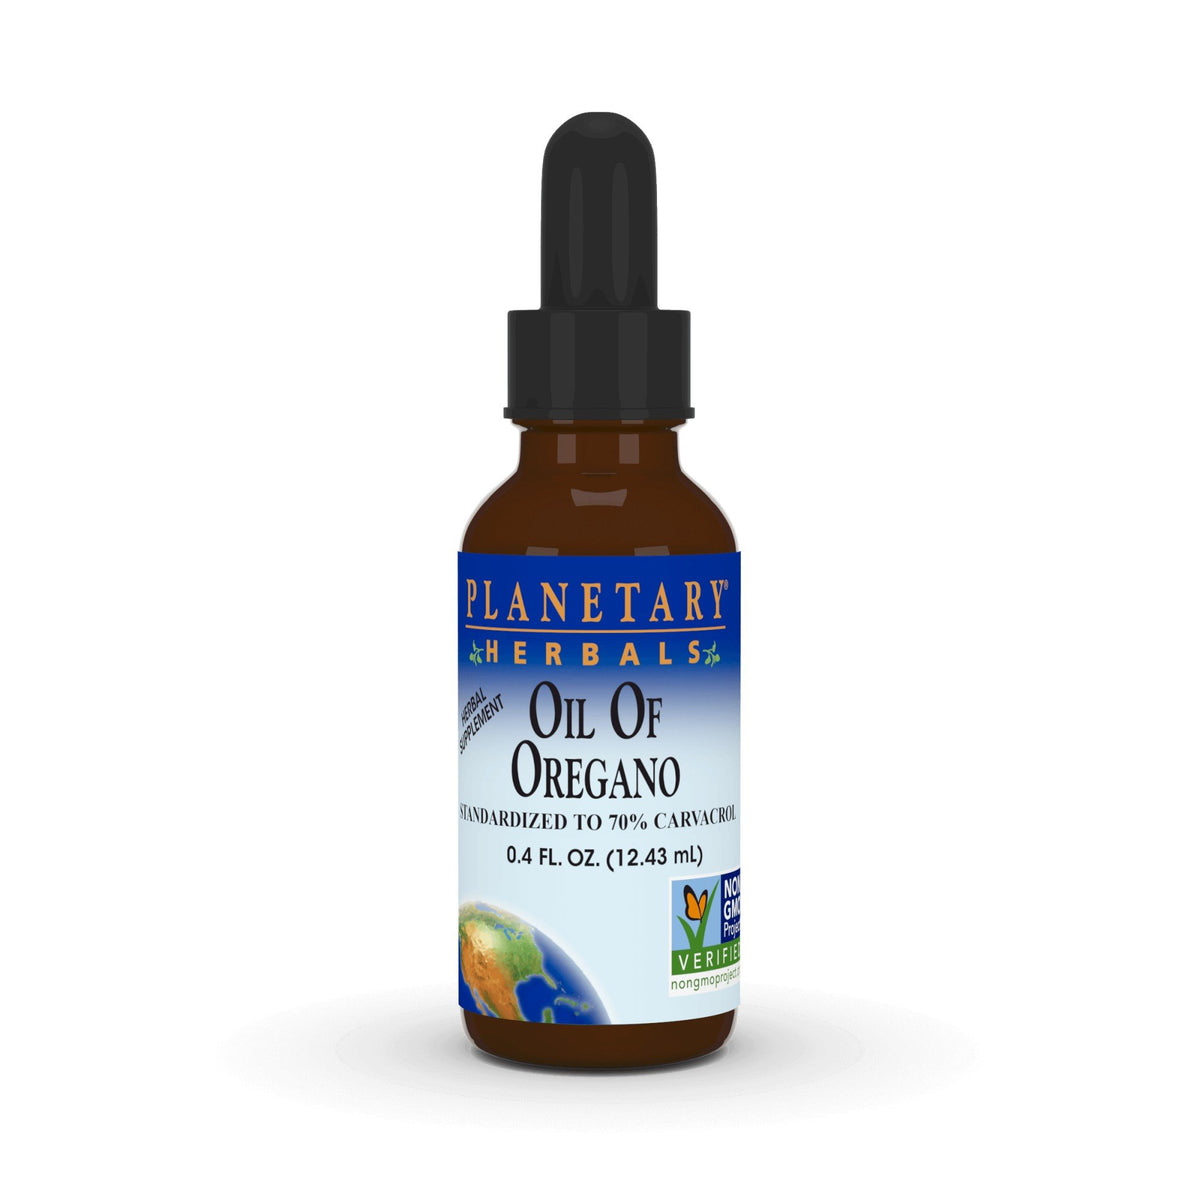 Planetary Herbals Oil of Oregano 0.4 fl oz Liquid